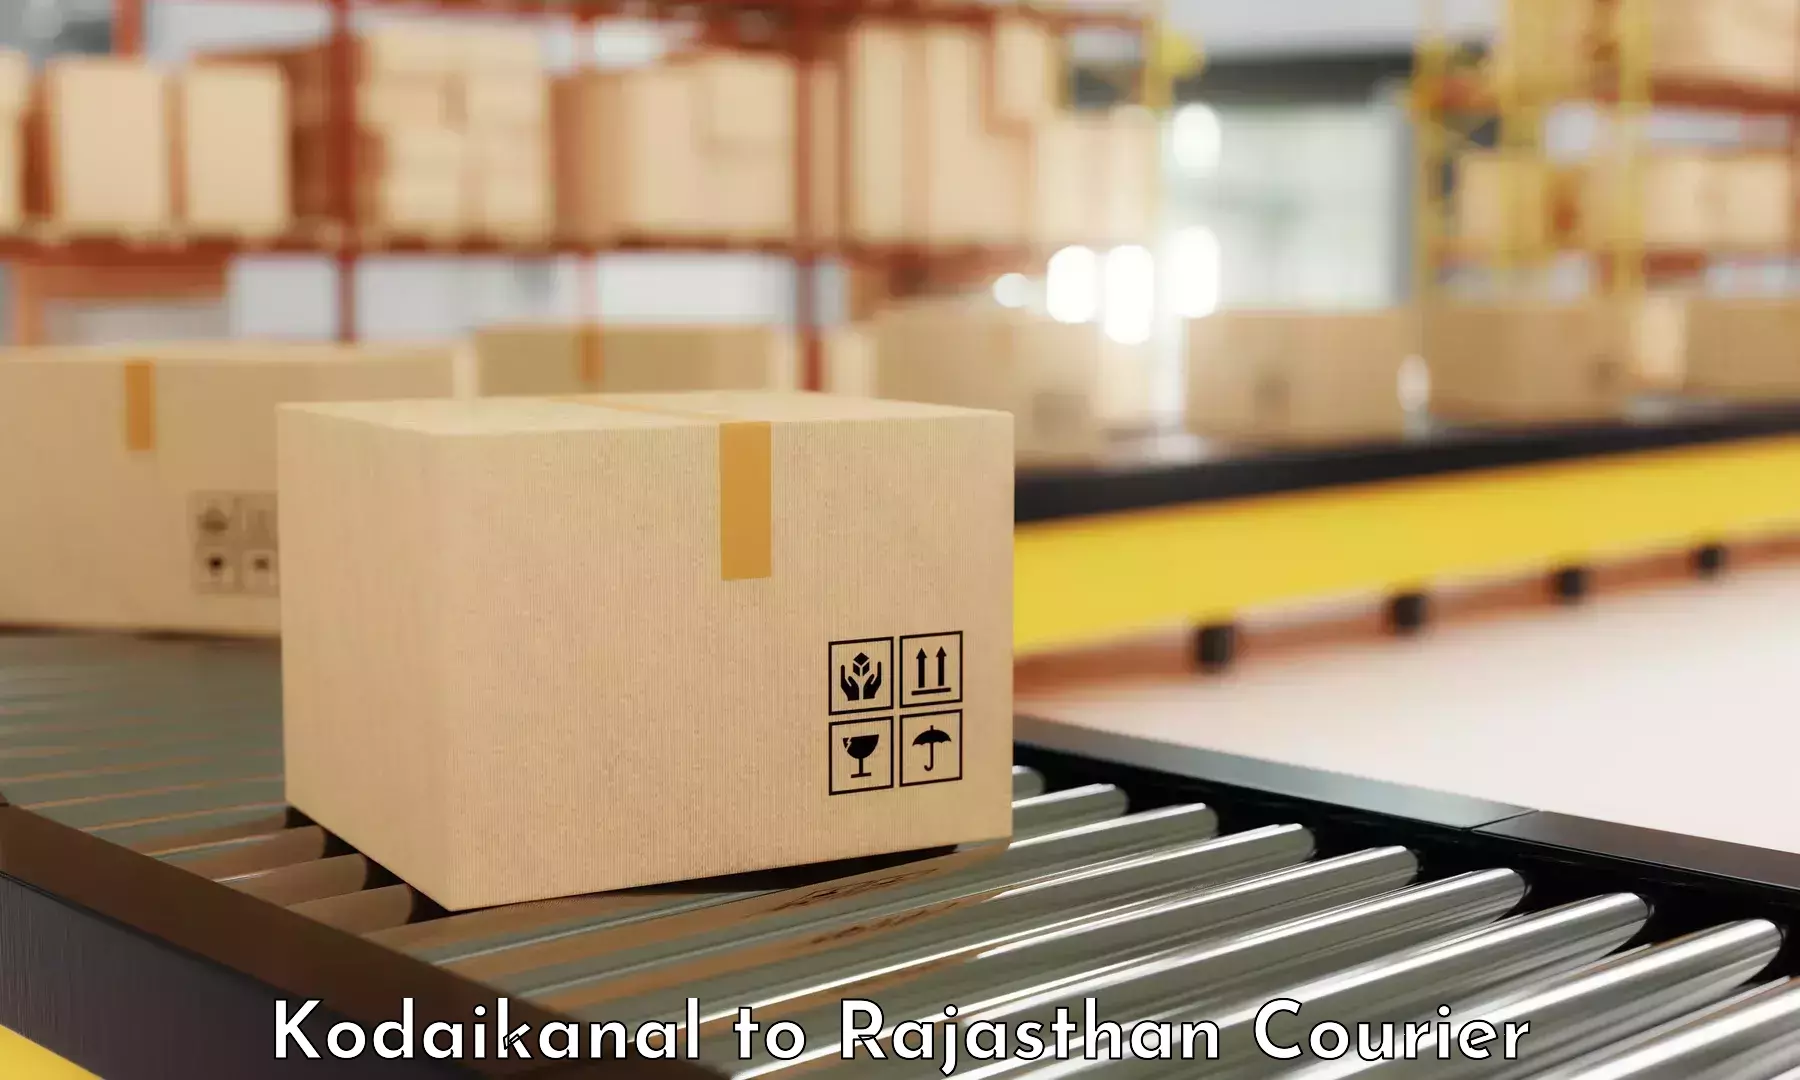 Supply chain efficiency Kodaikanal to Ras Pali